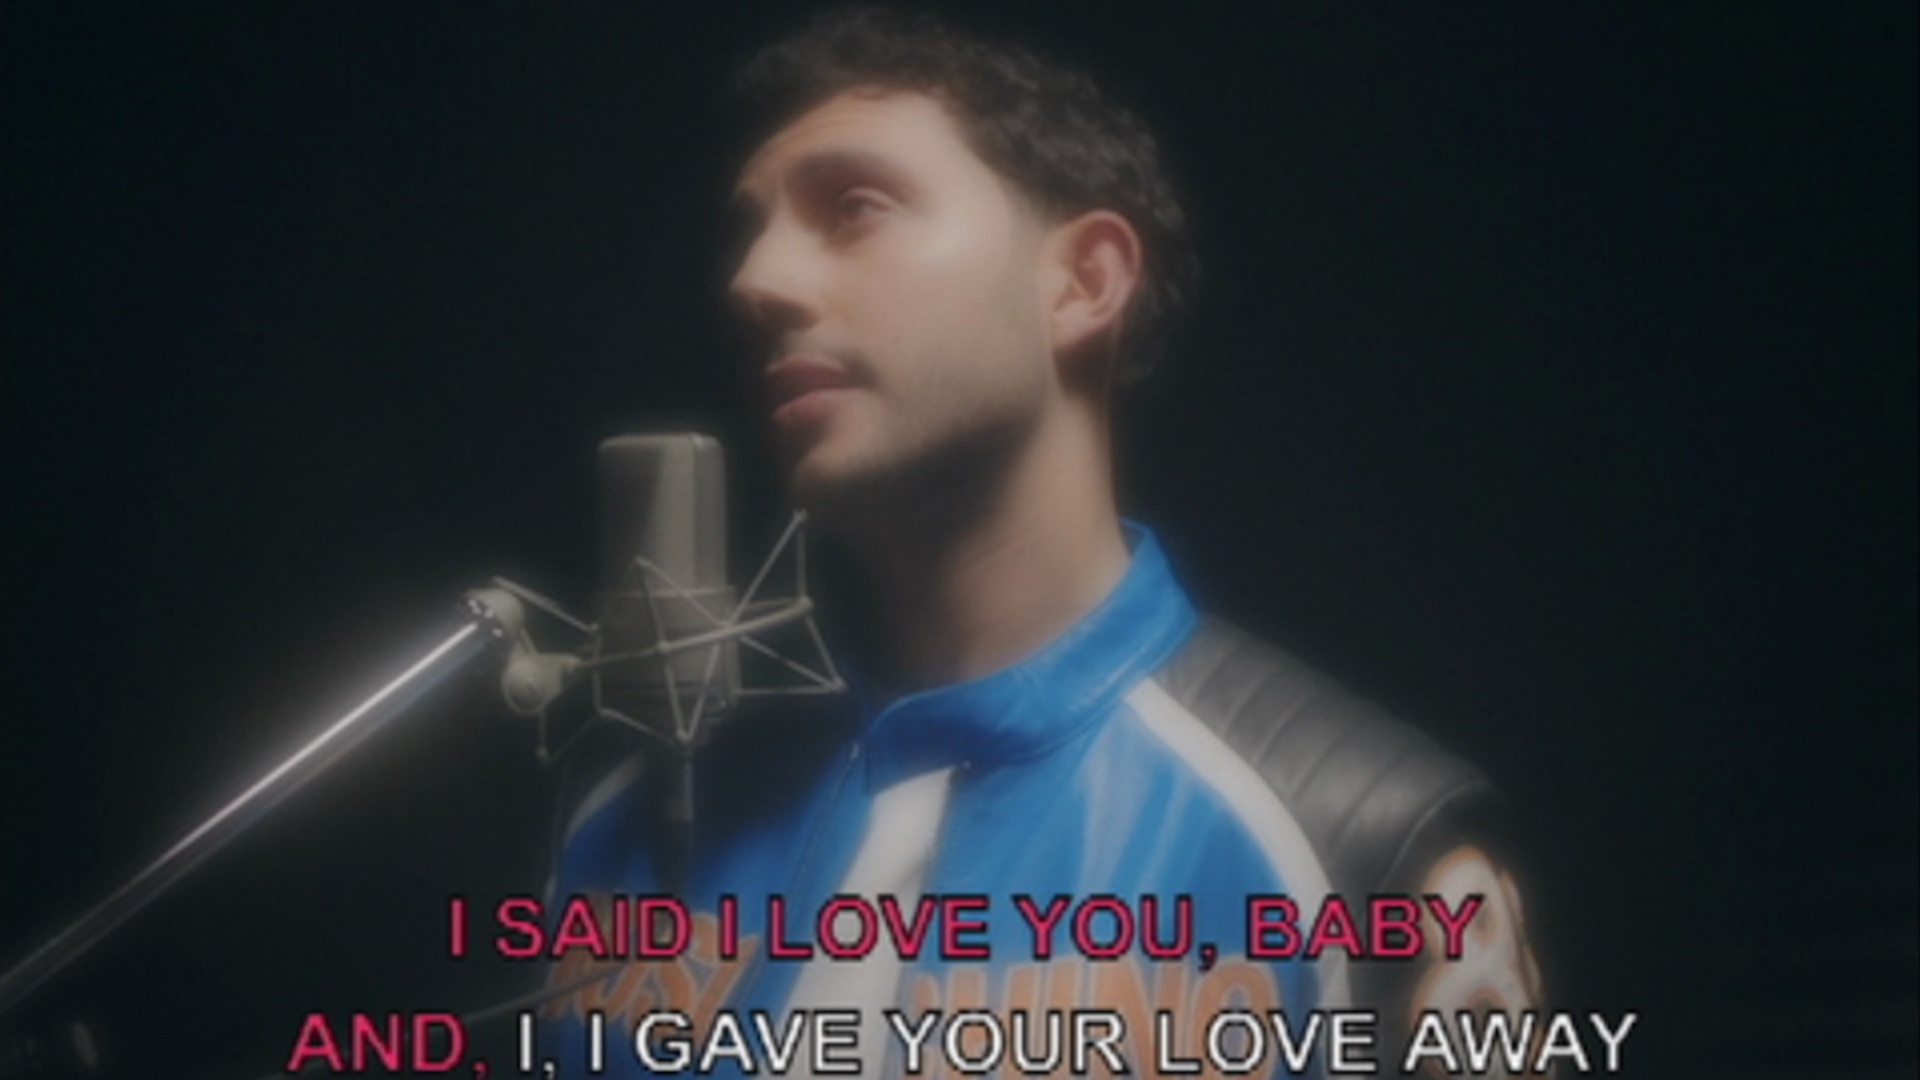 Gave Your Love Away by Majid Jordan on Apple Music